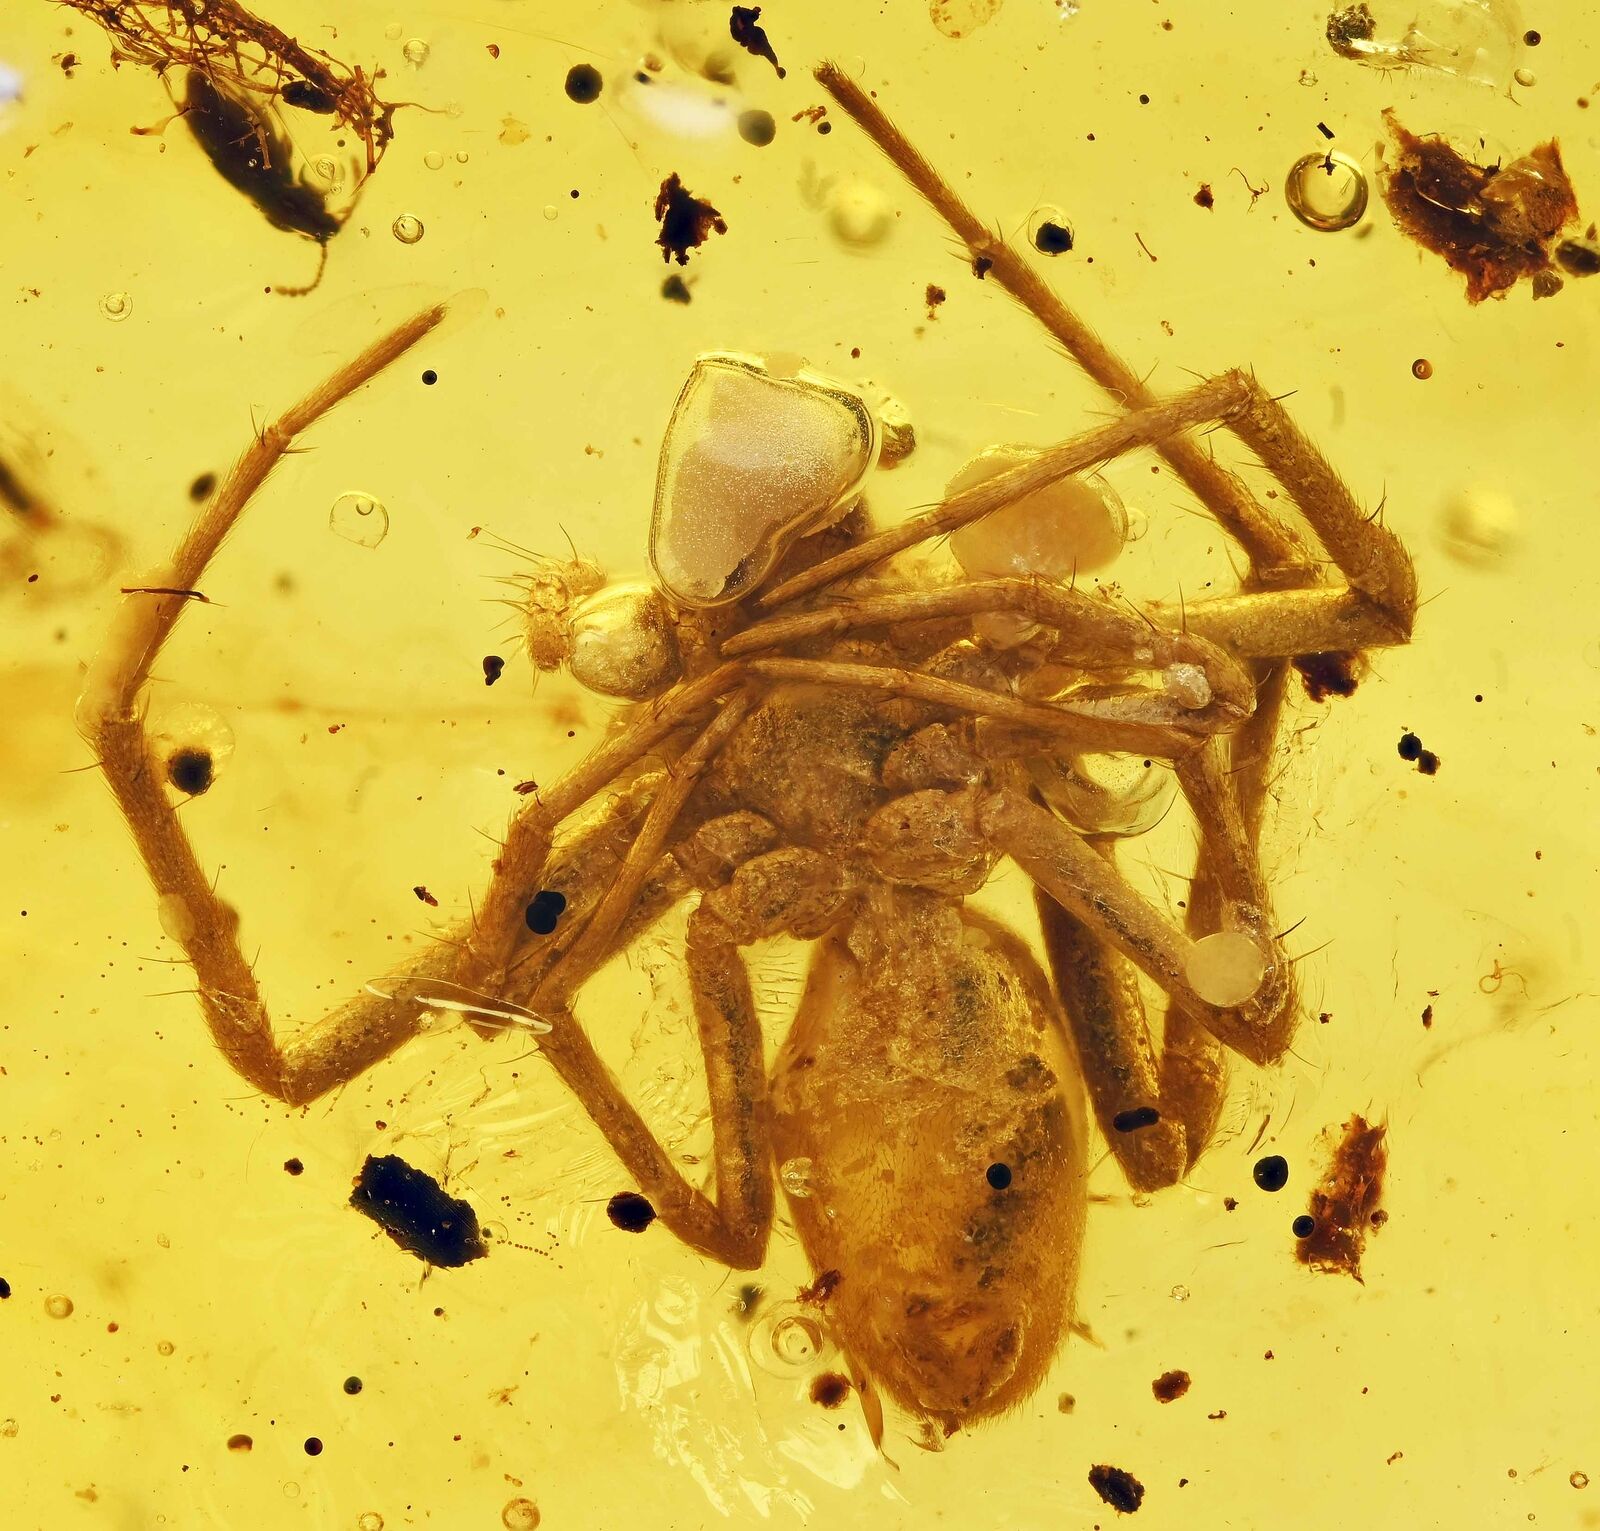 Detailed Araneae: Araneida (Spider), Fossil Inclusion in Burmese Amber